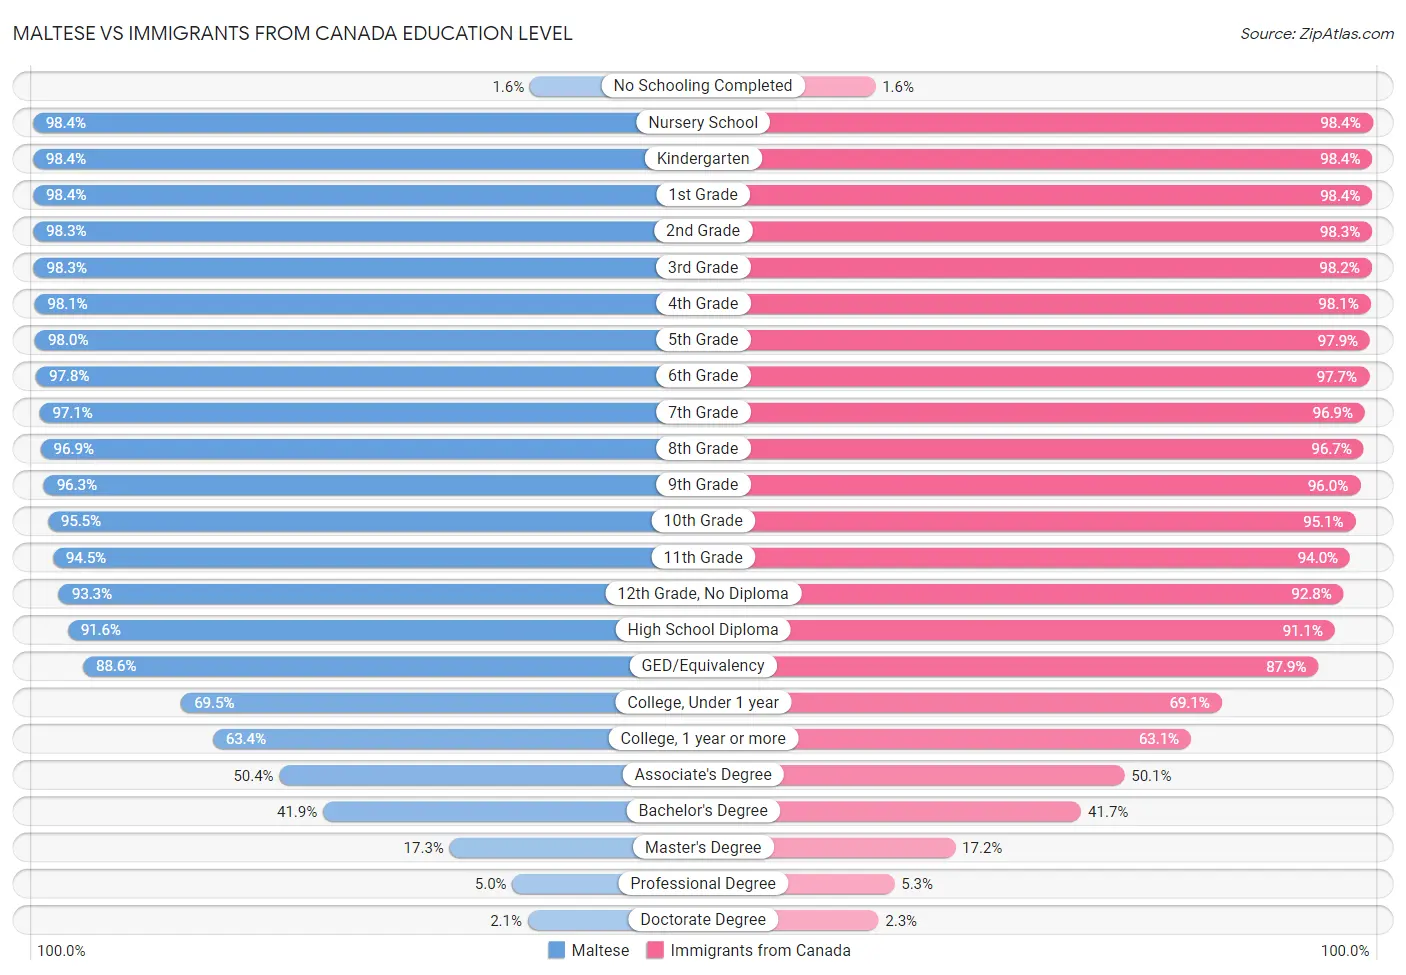 Maltese vs Immigrants from Canada Education Level